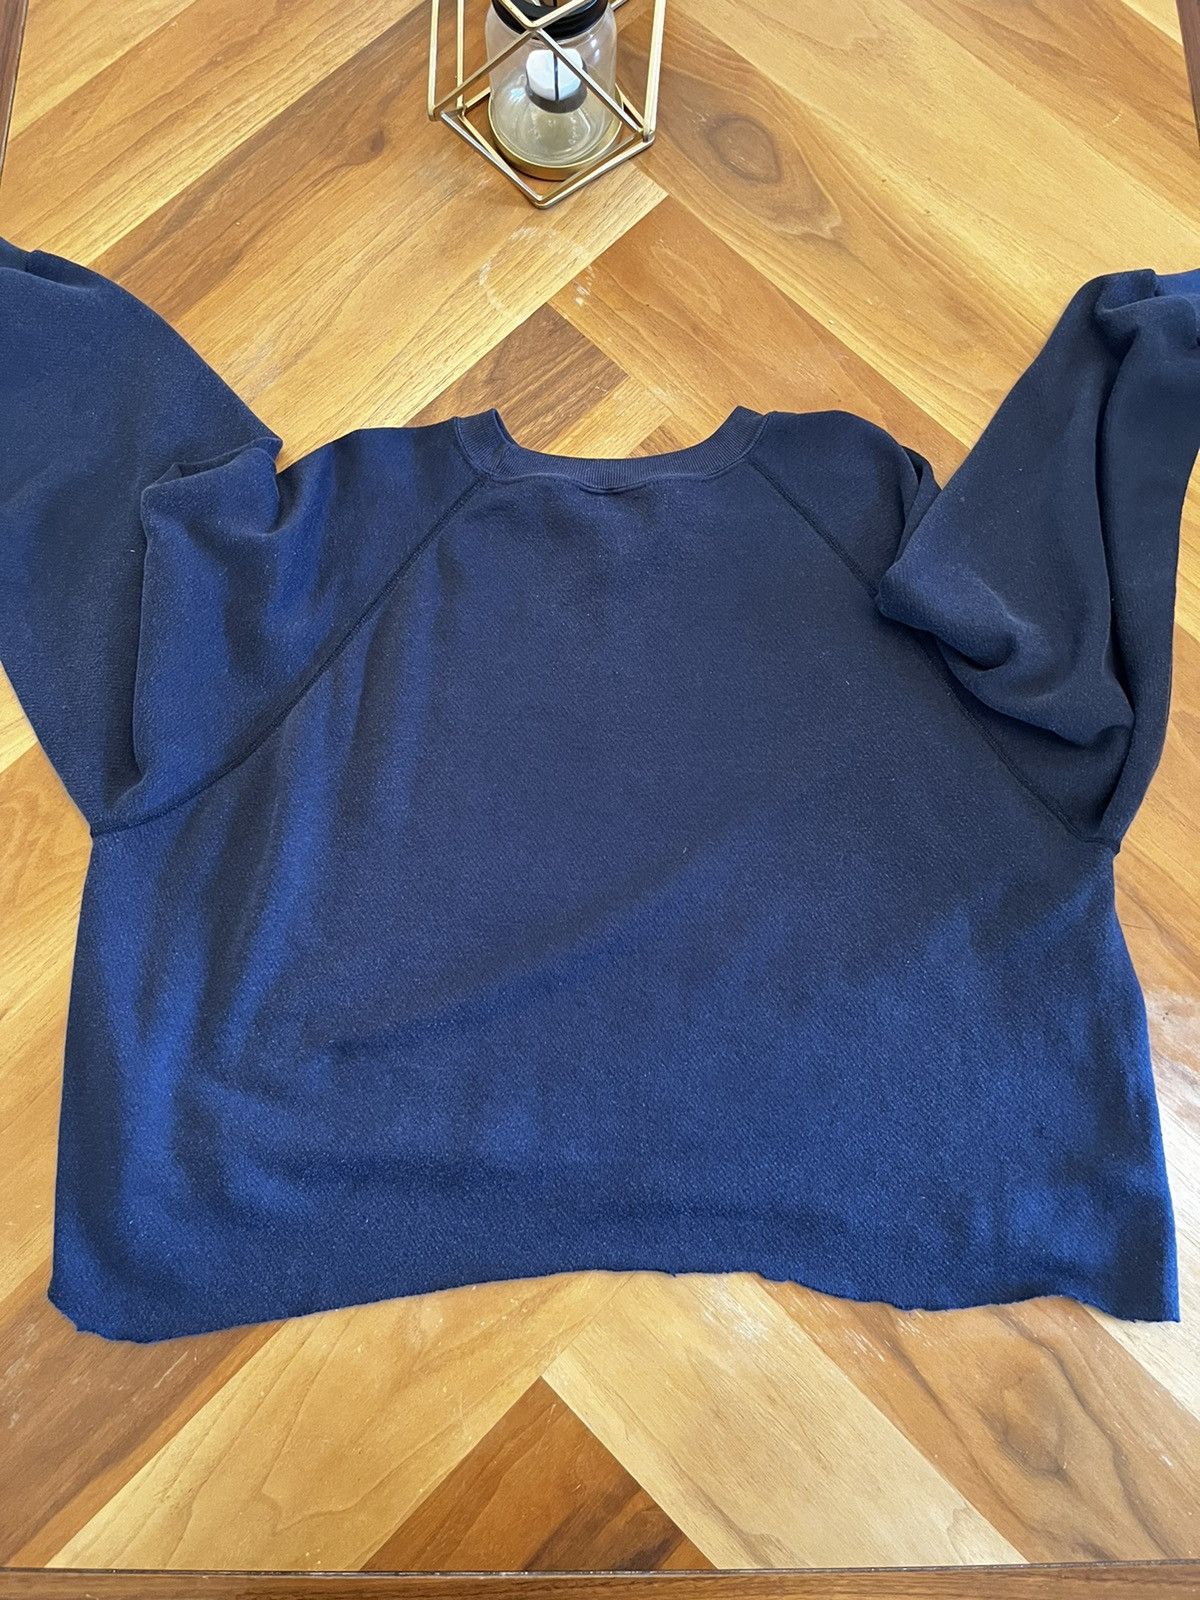 Vintage Rare vintage Oxford university raglan sweater Size US L / EU 52-54 / 3 - 7 Thumbnail